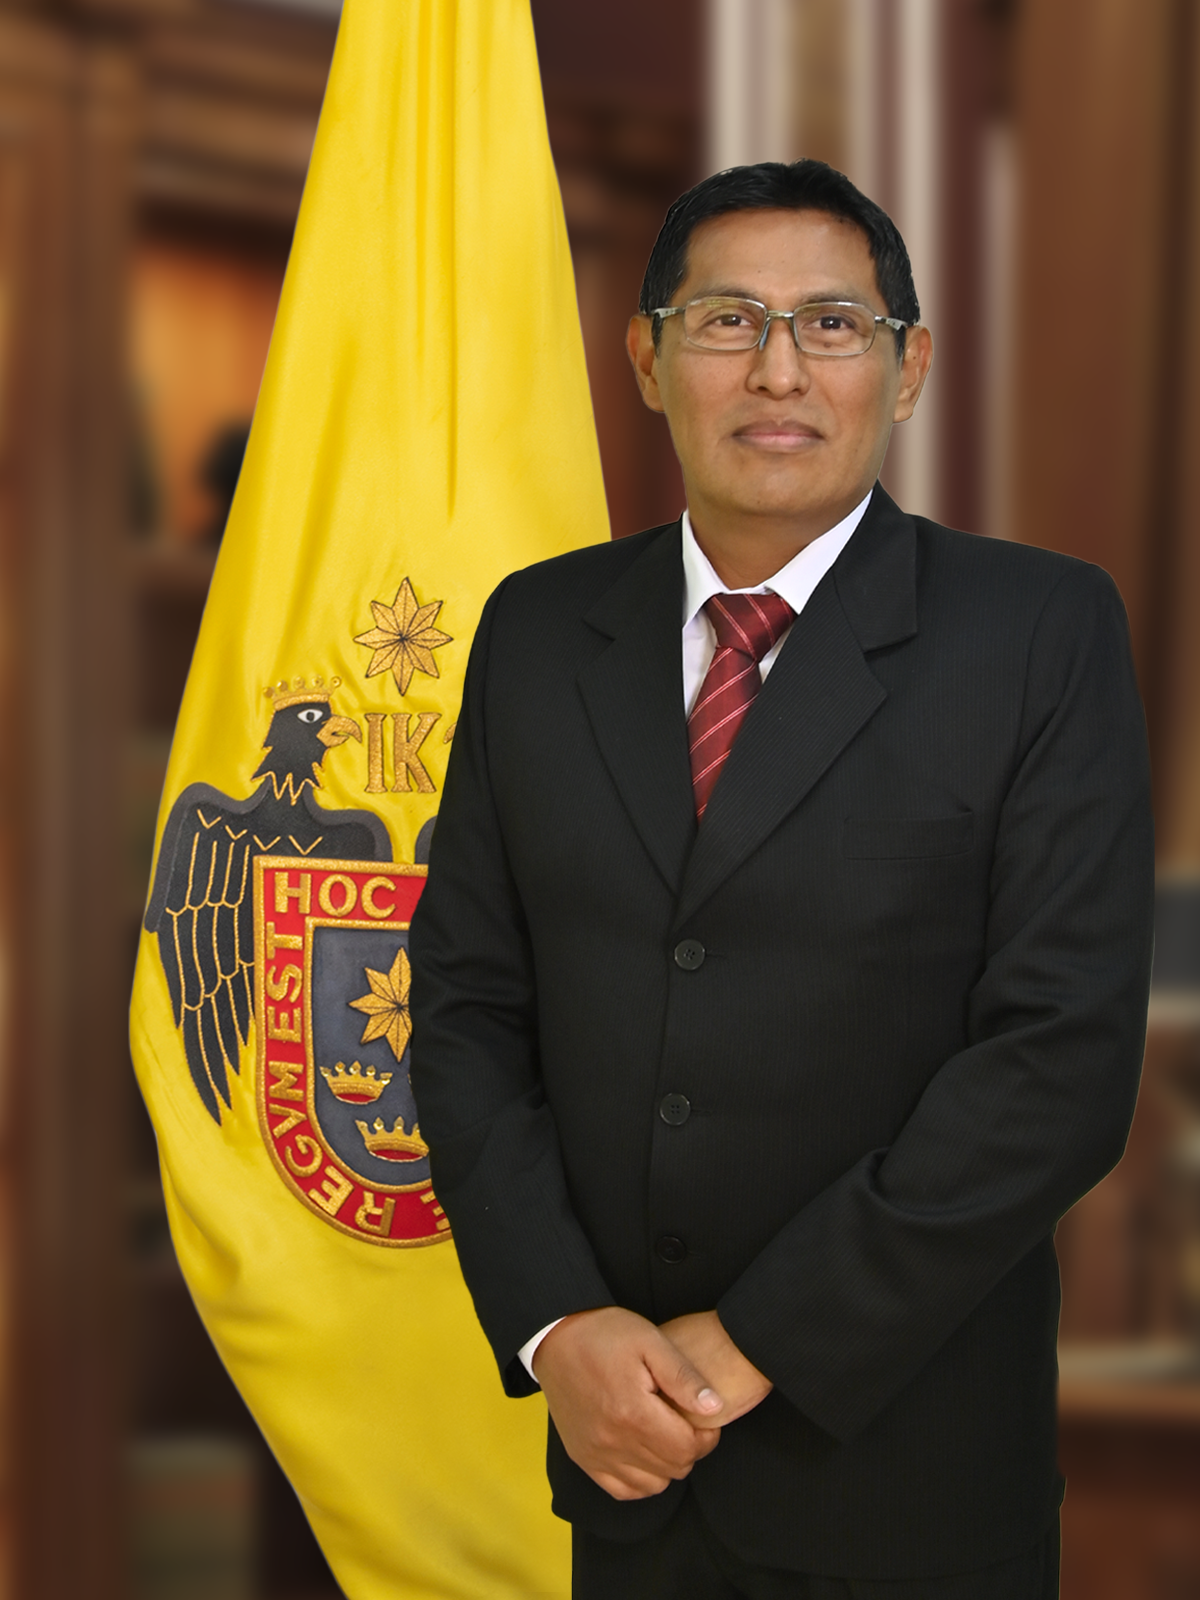 Martin Alexander Soriano Avalos